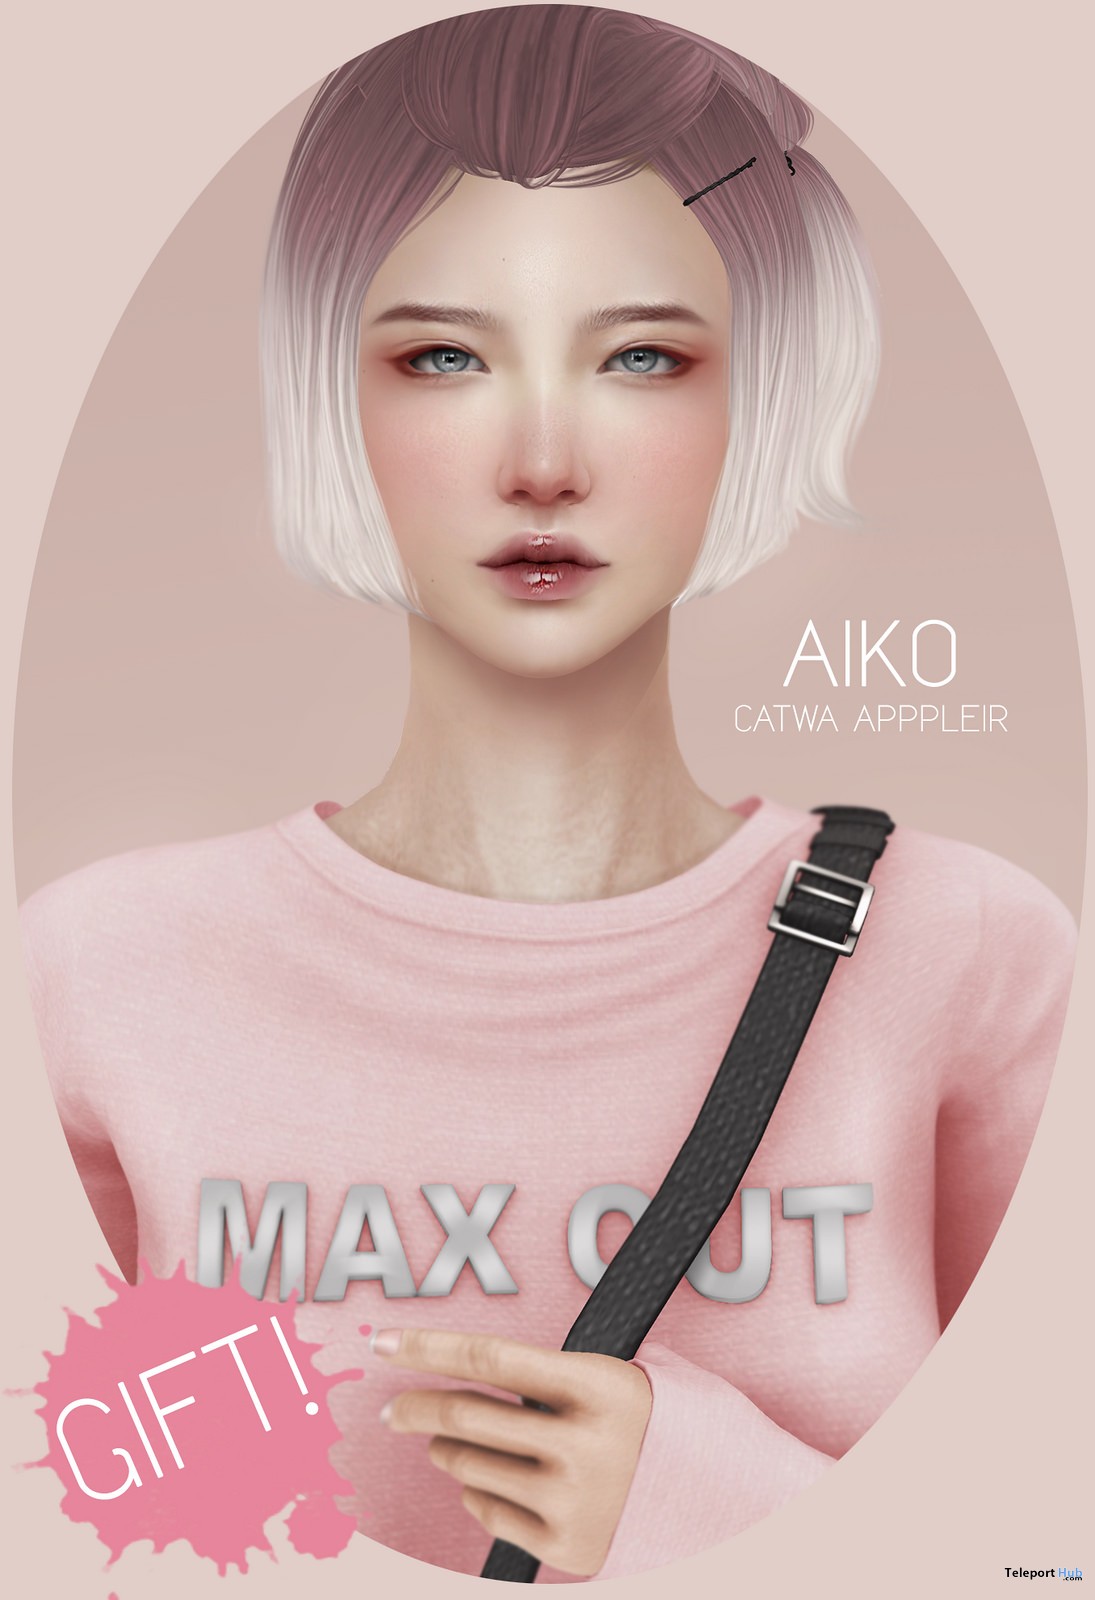 Aiko Catwa Head Applier Gift by Baotaom - Teleport Hub - teleporthub.com